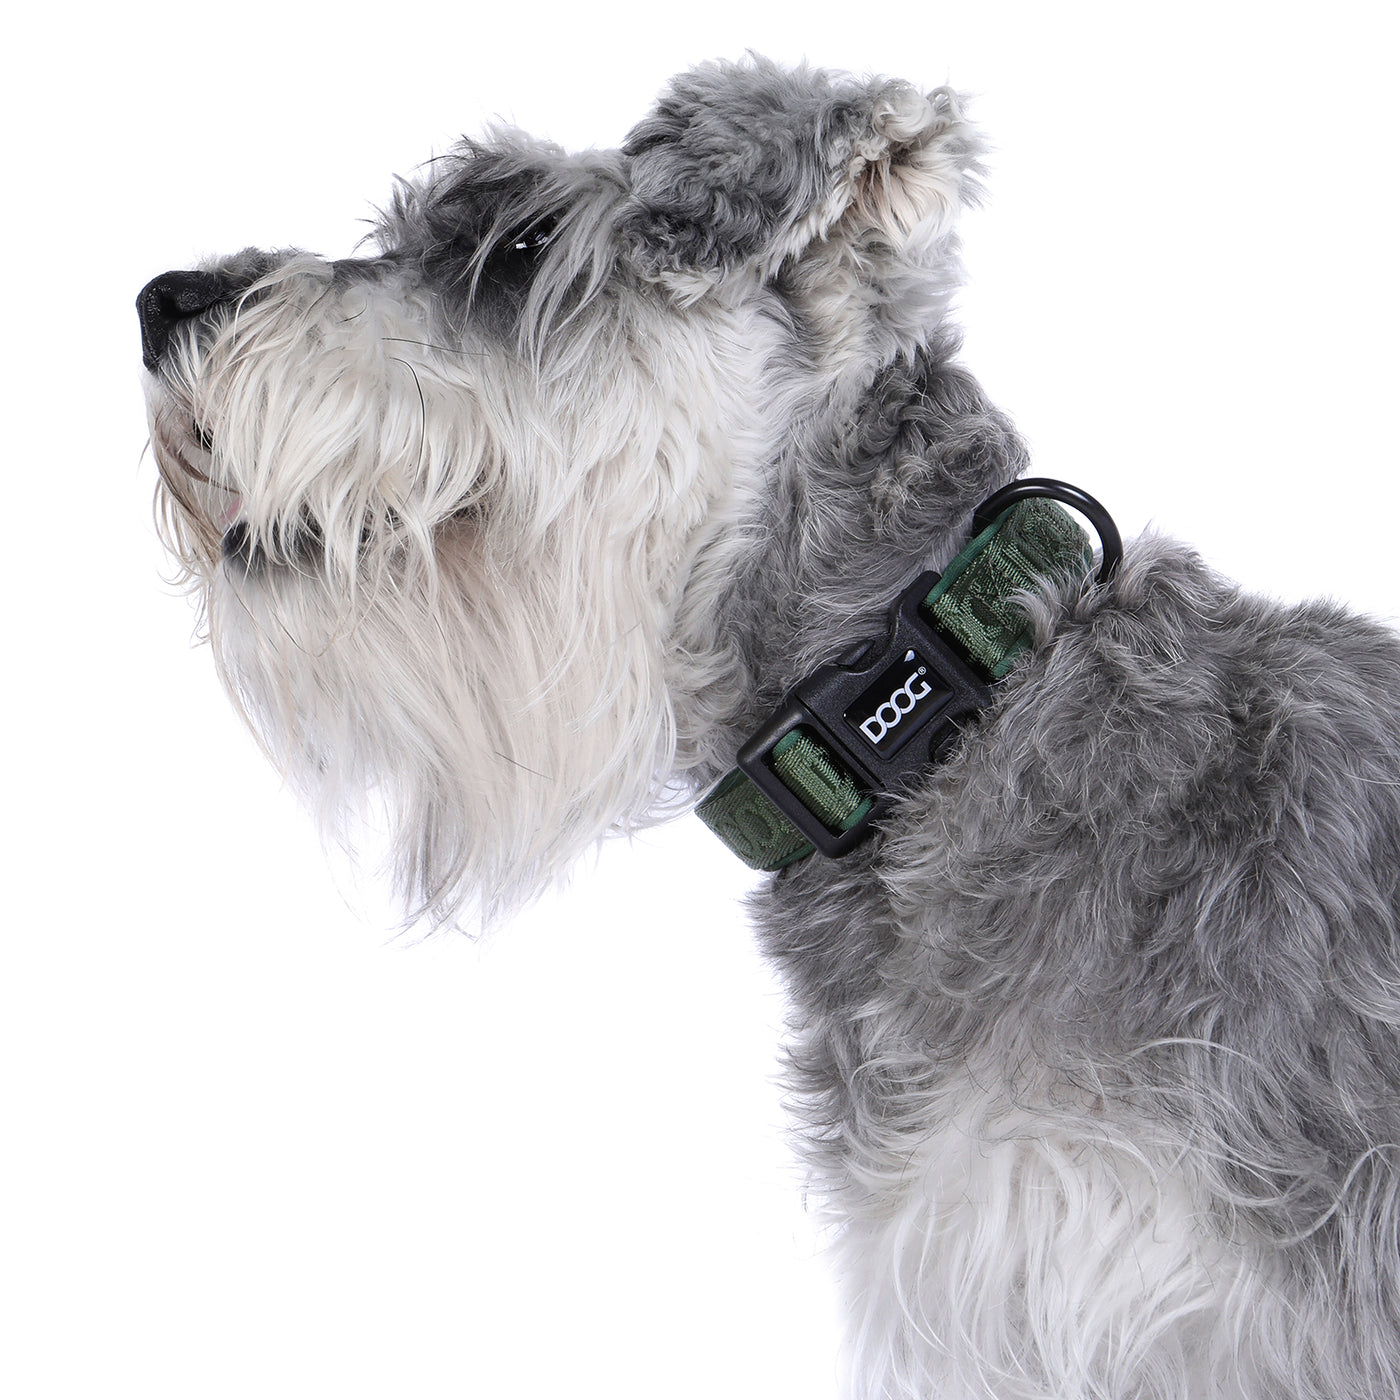 Neosport Neoprene Dog Collar - Olive Green